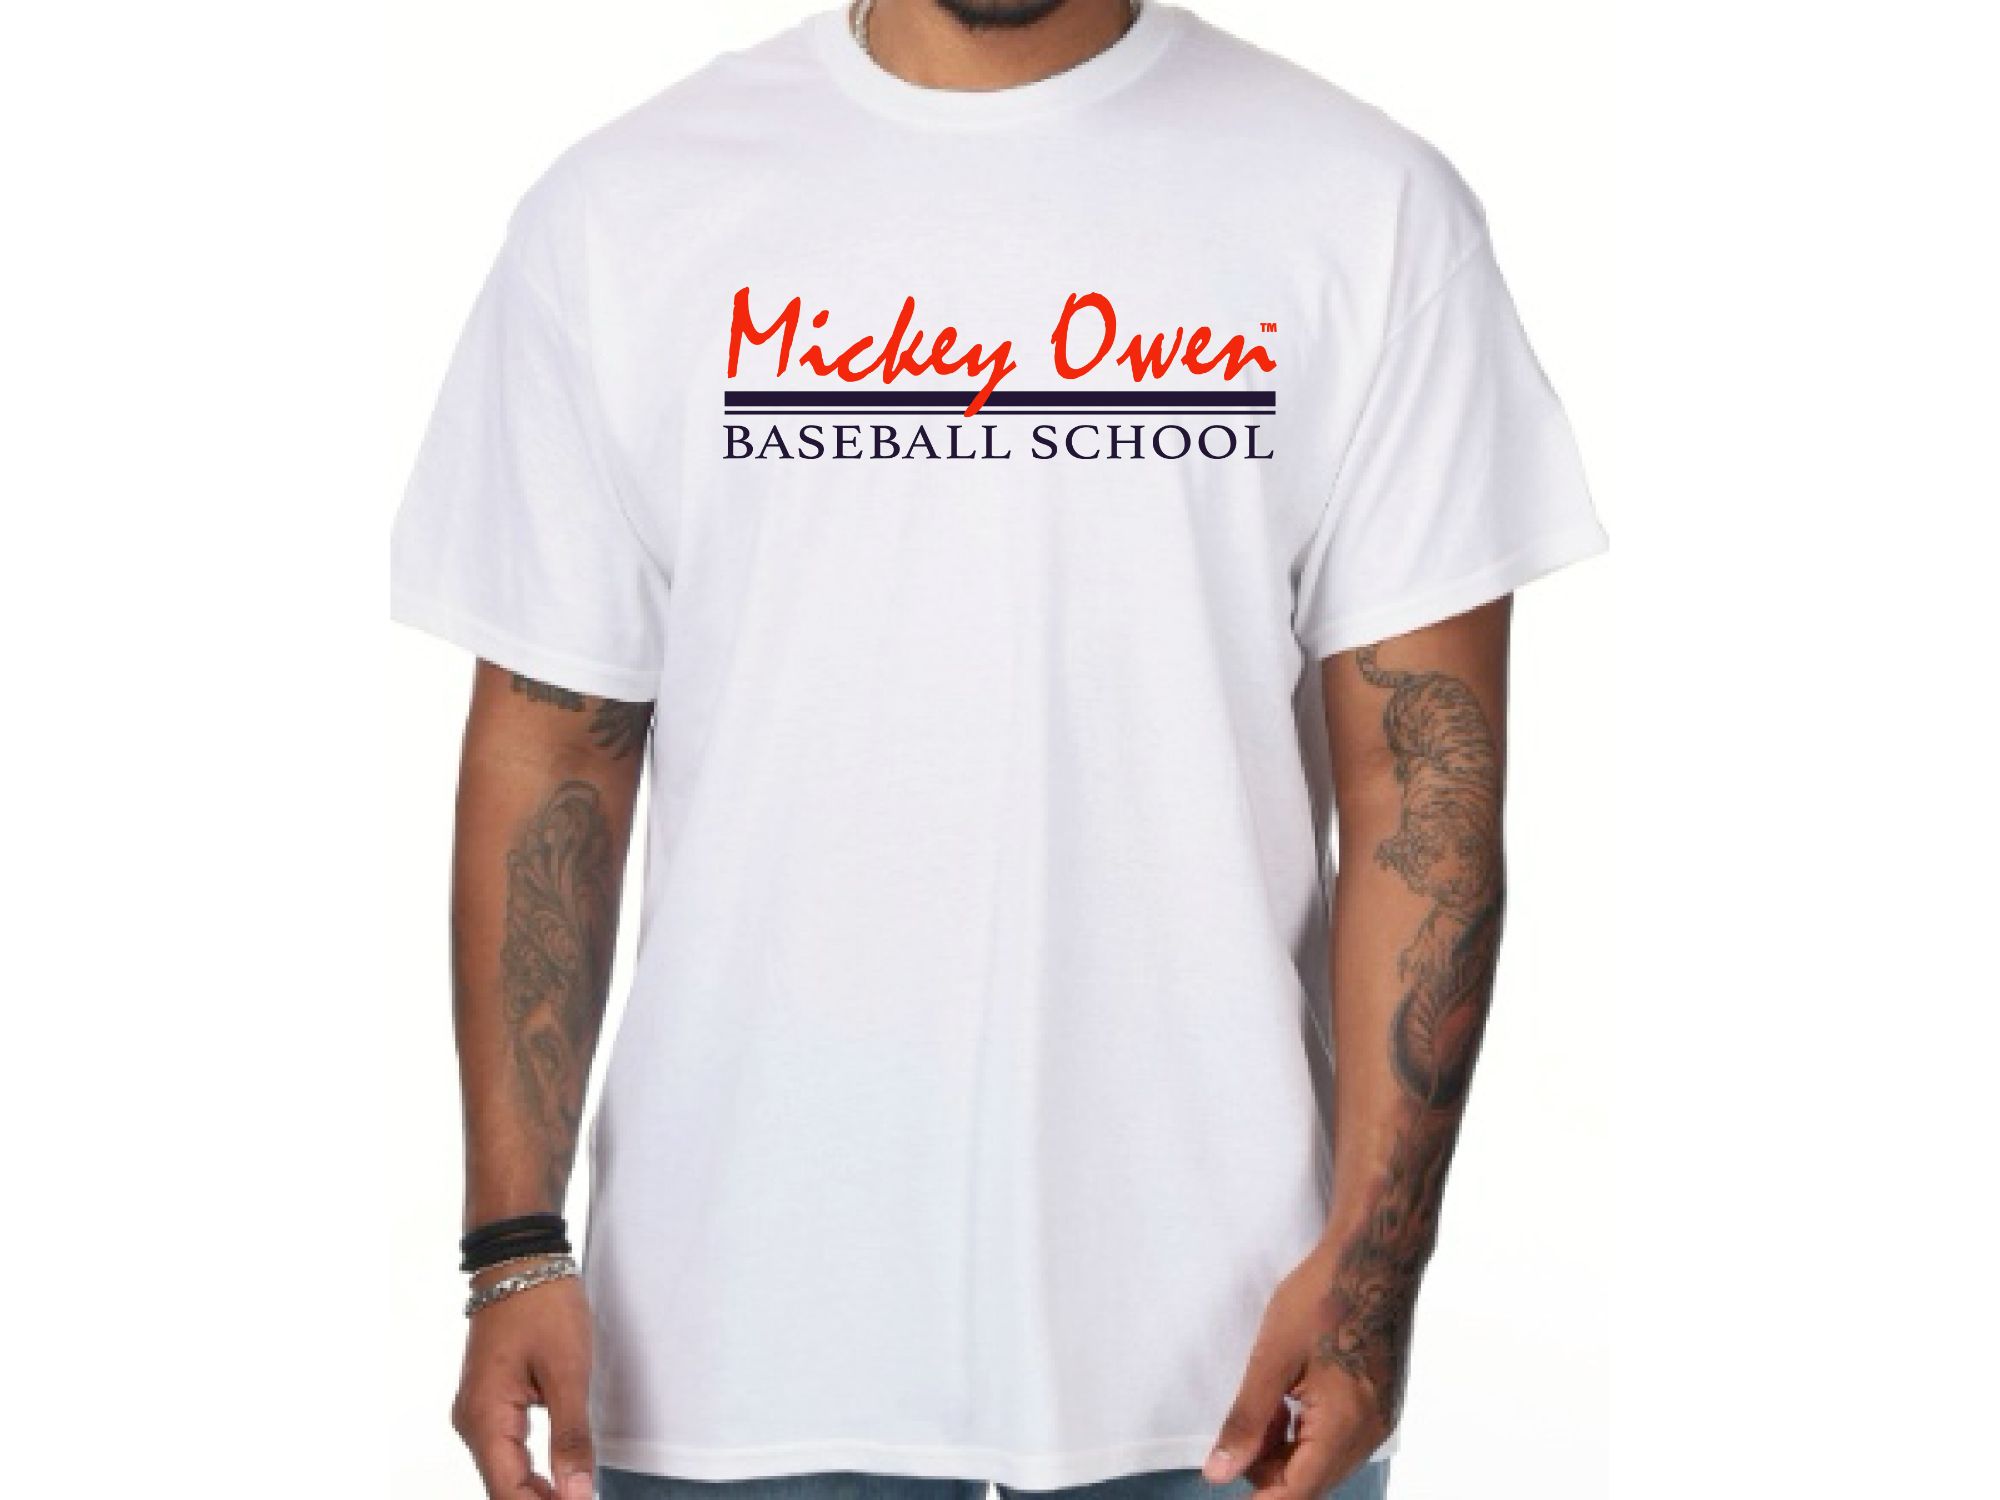 White Adult Mickey Owen Baseball School Tee